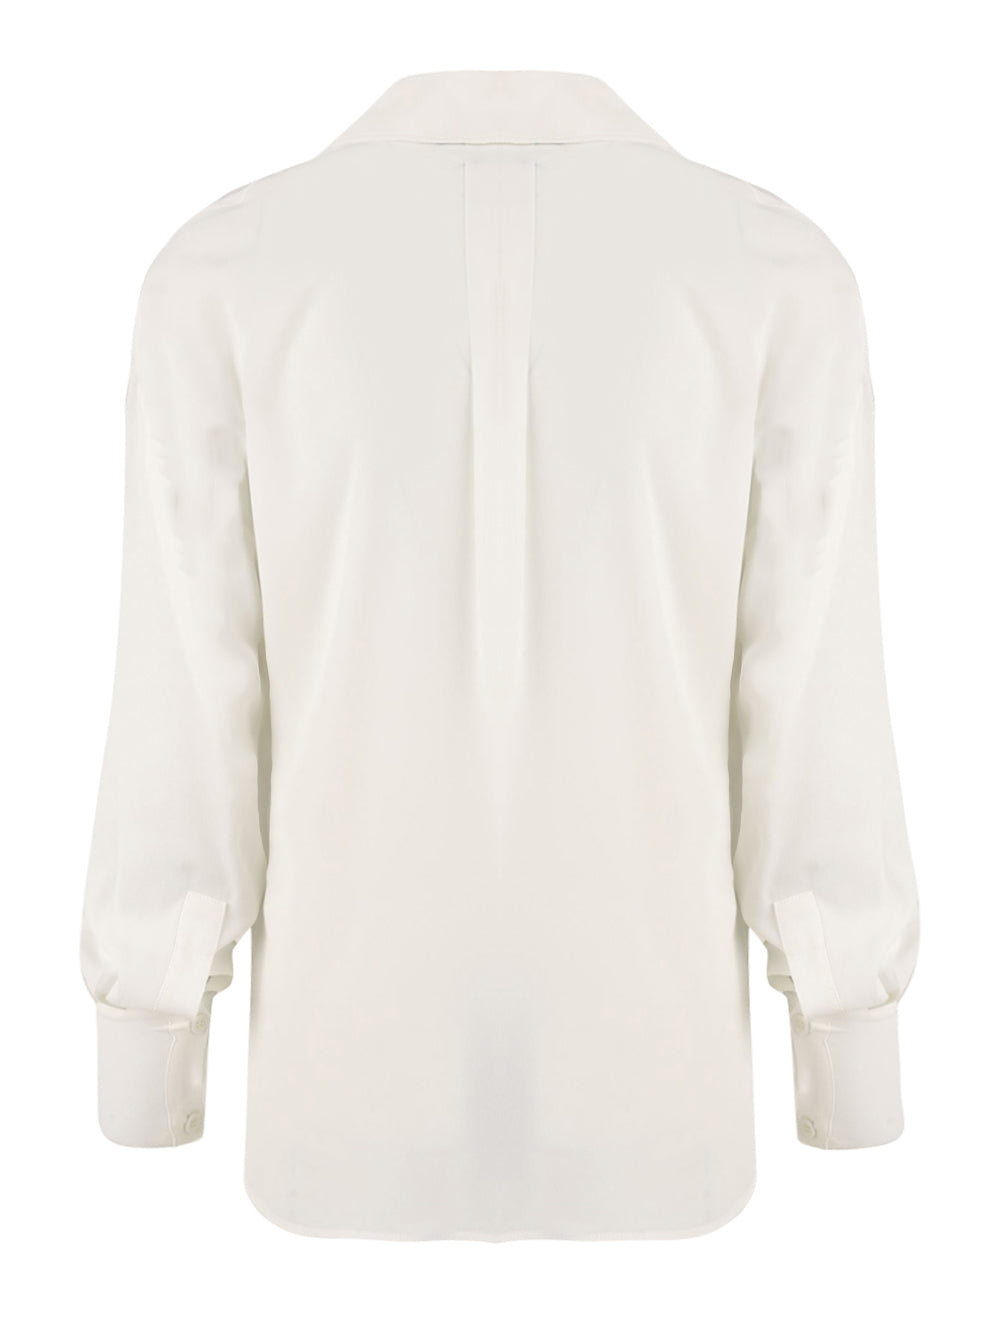 Camicia Donna tinta unita bianco, Atelier Legora, retro